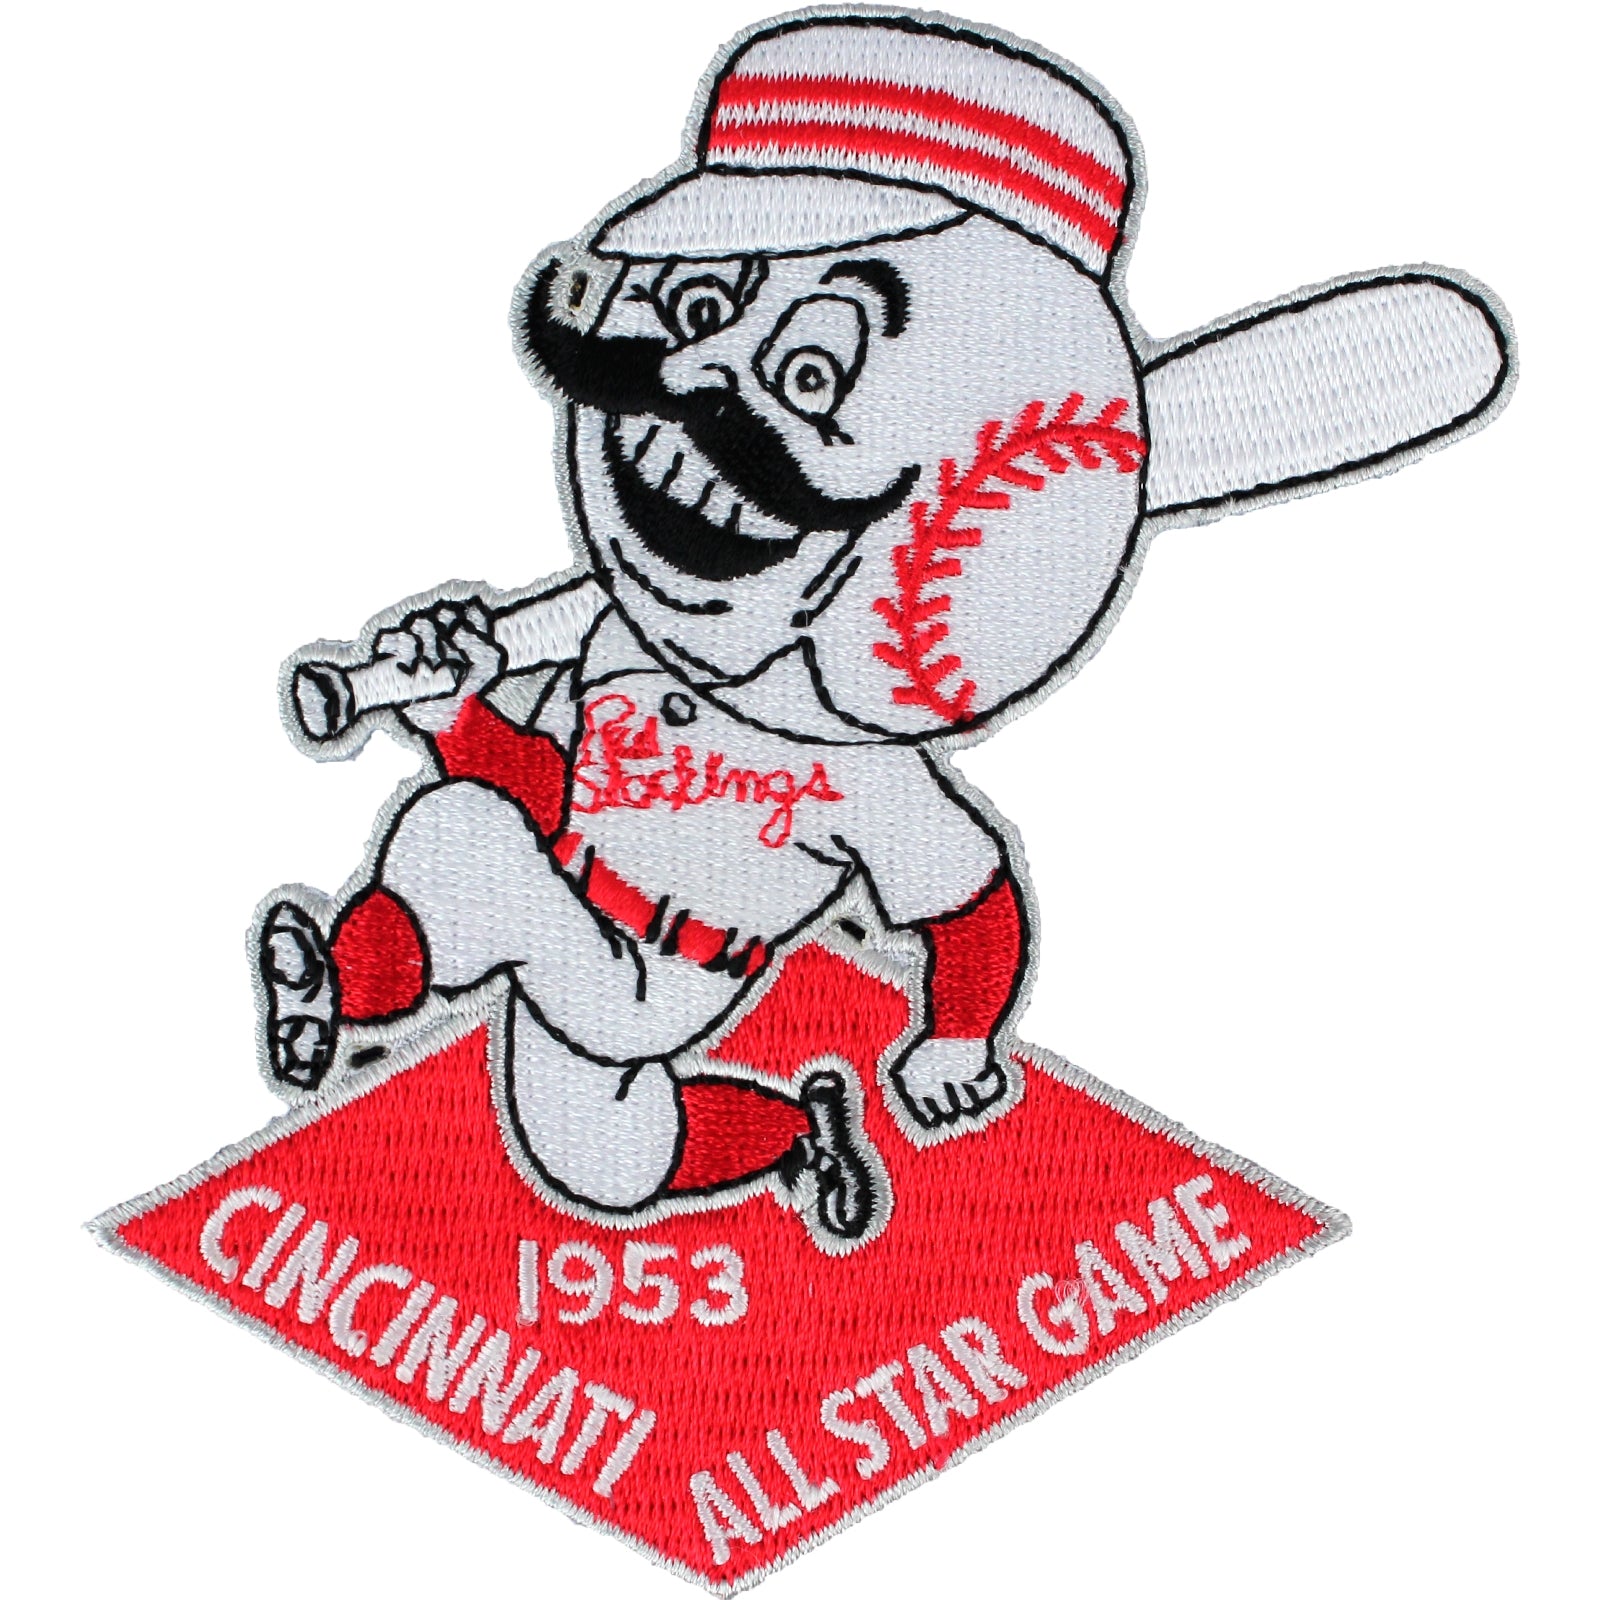 1919 Cincinnati Reds MLB World Series Championship Jersey Patch